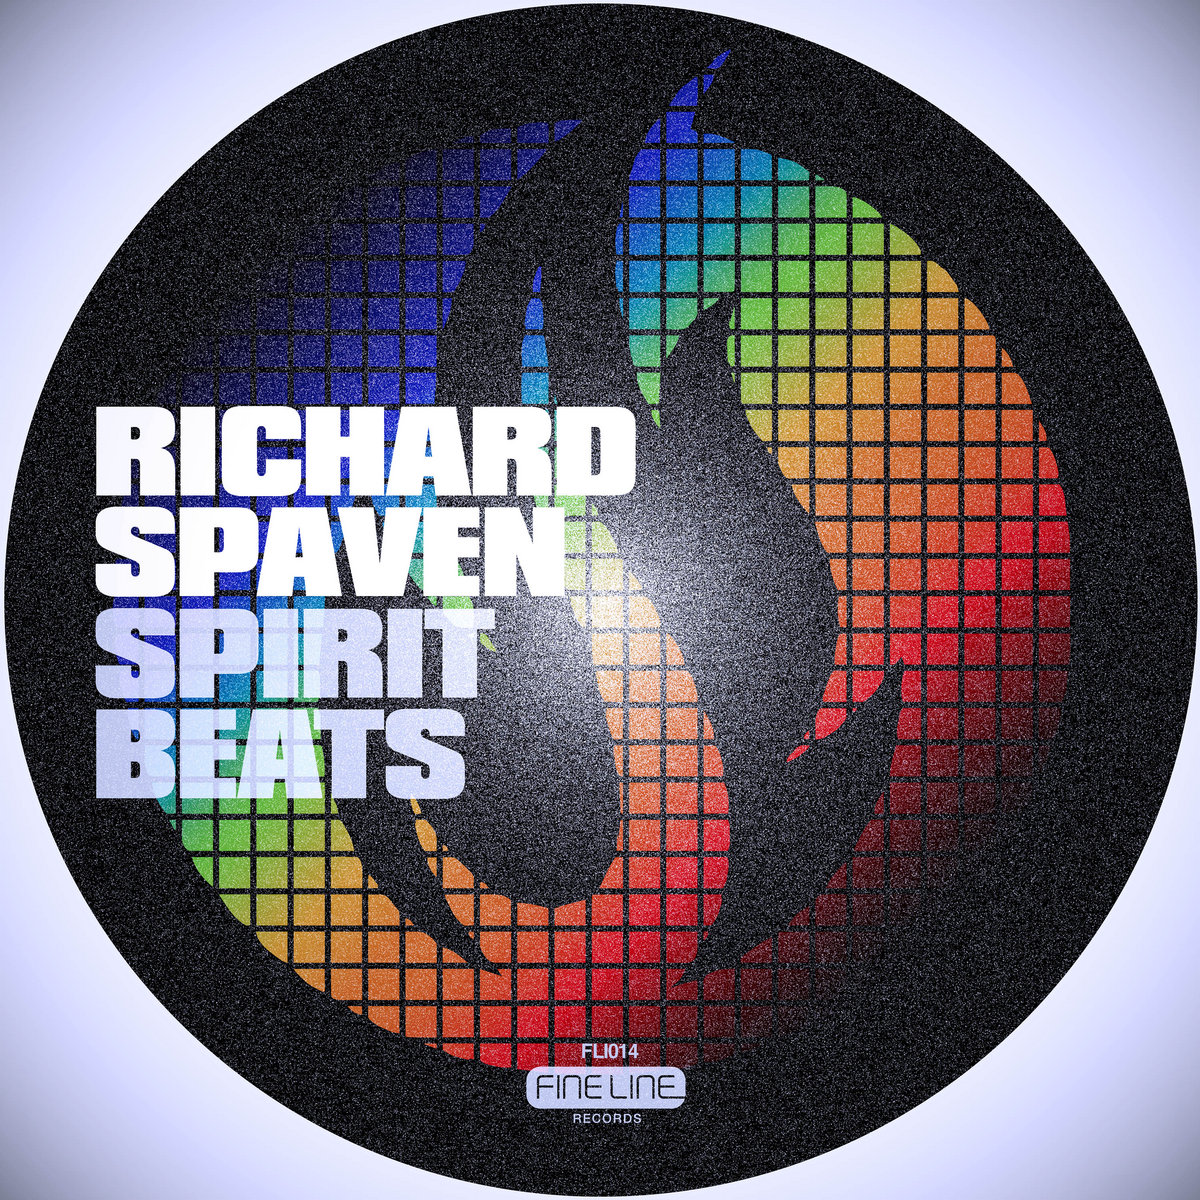 Richard Spaven Spirit Beats